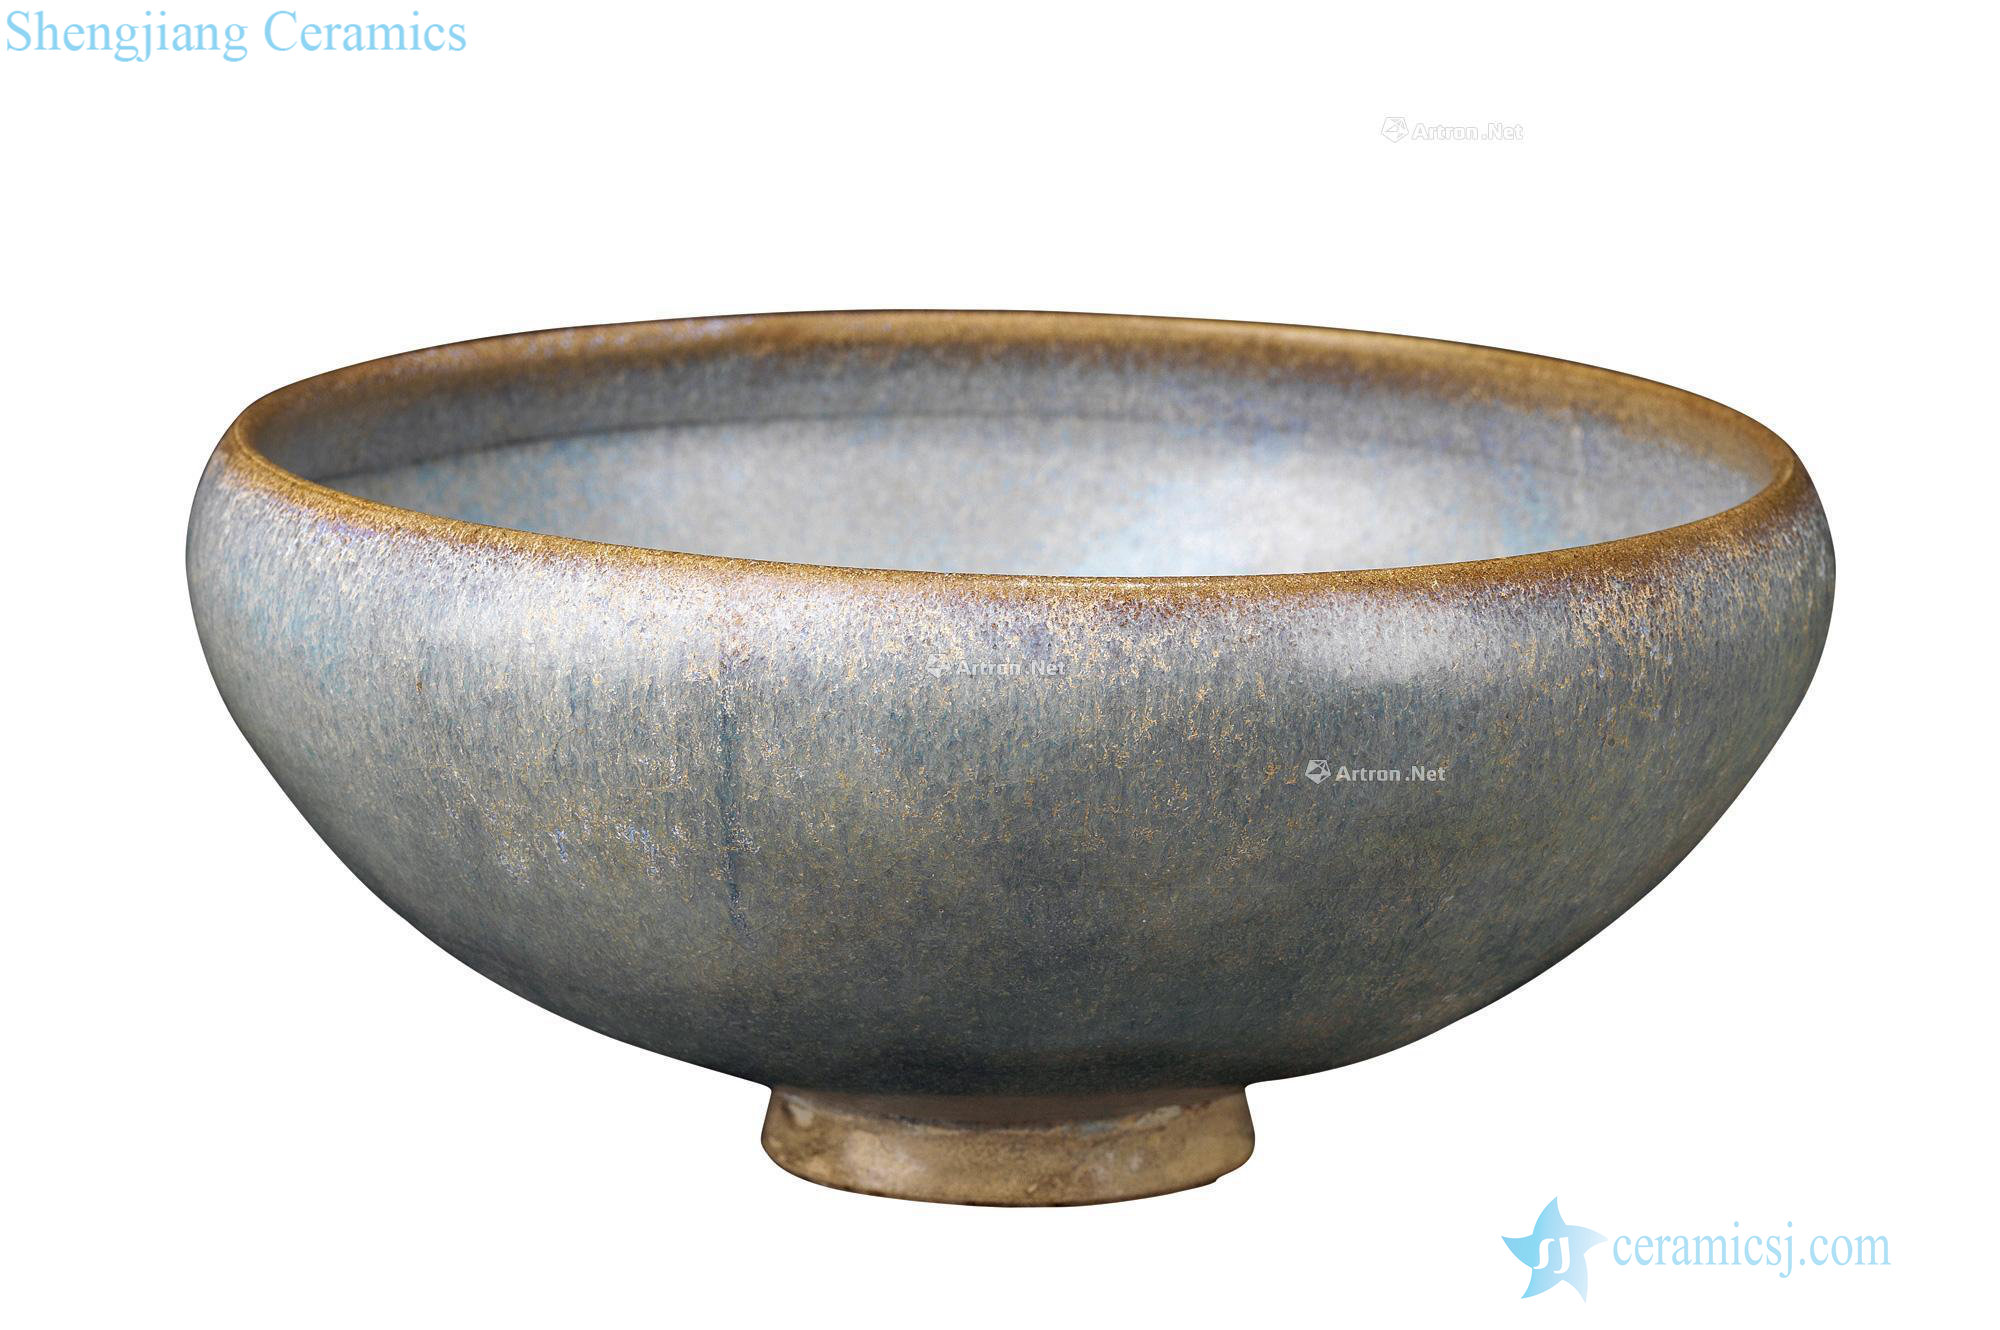 In the yuan dynasty white glaze kiln pot